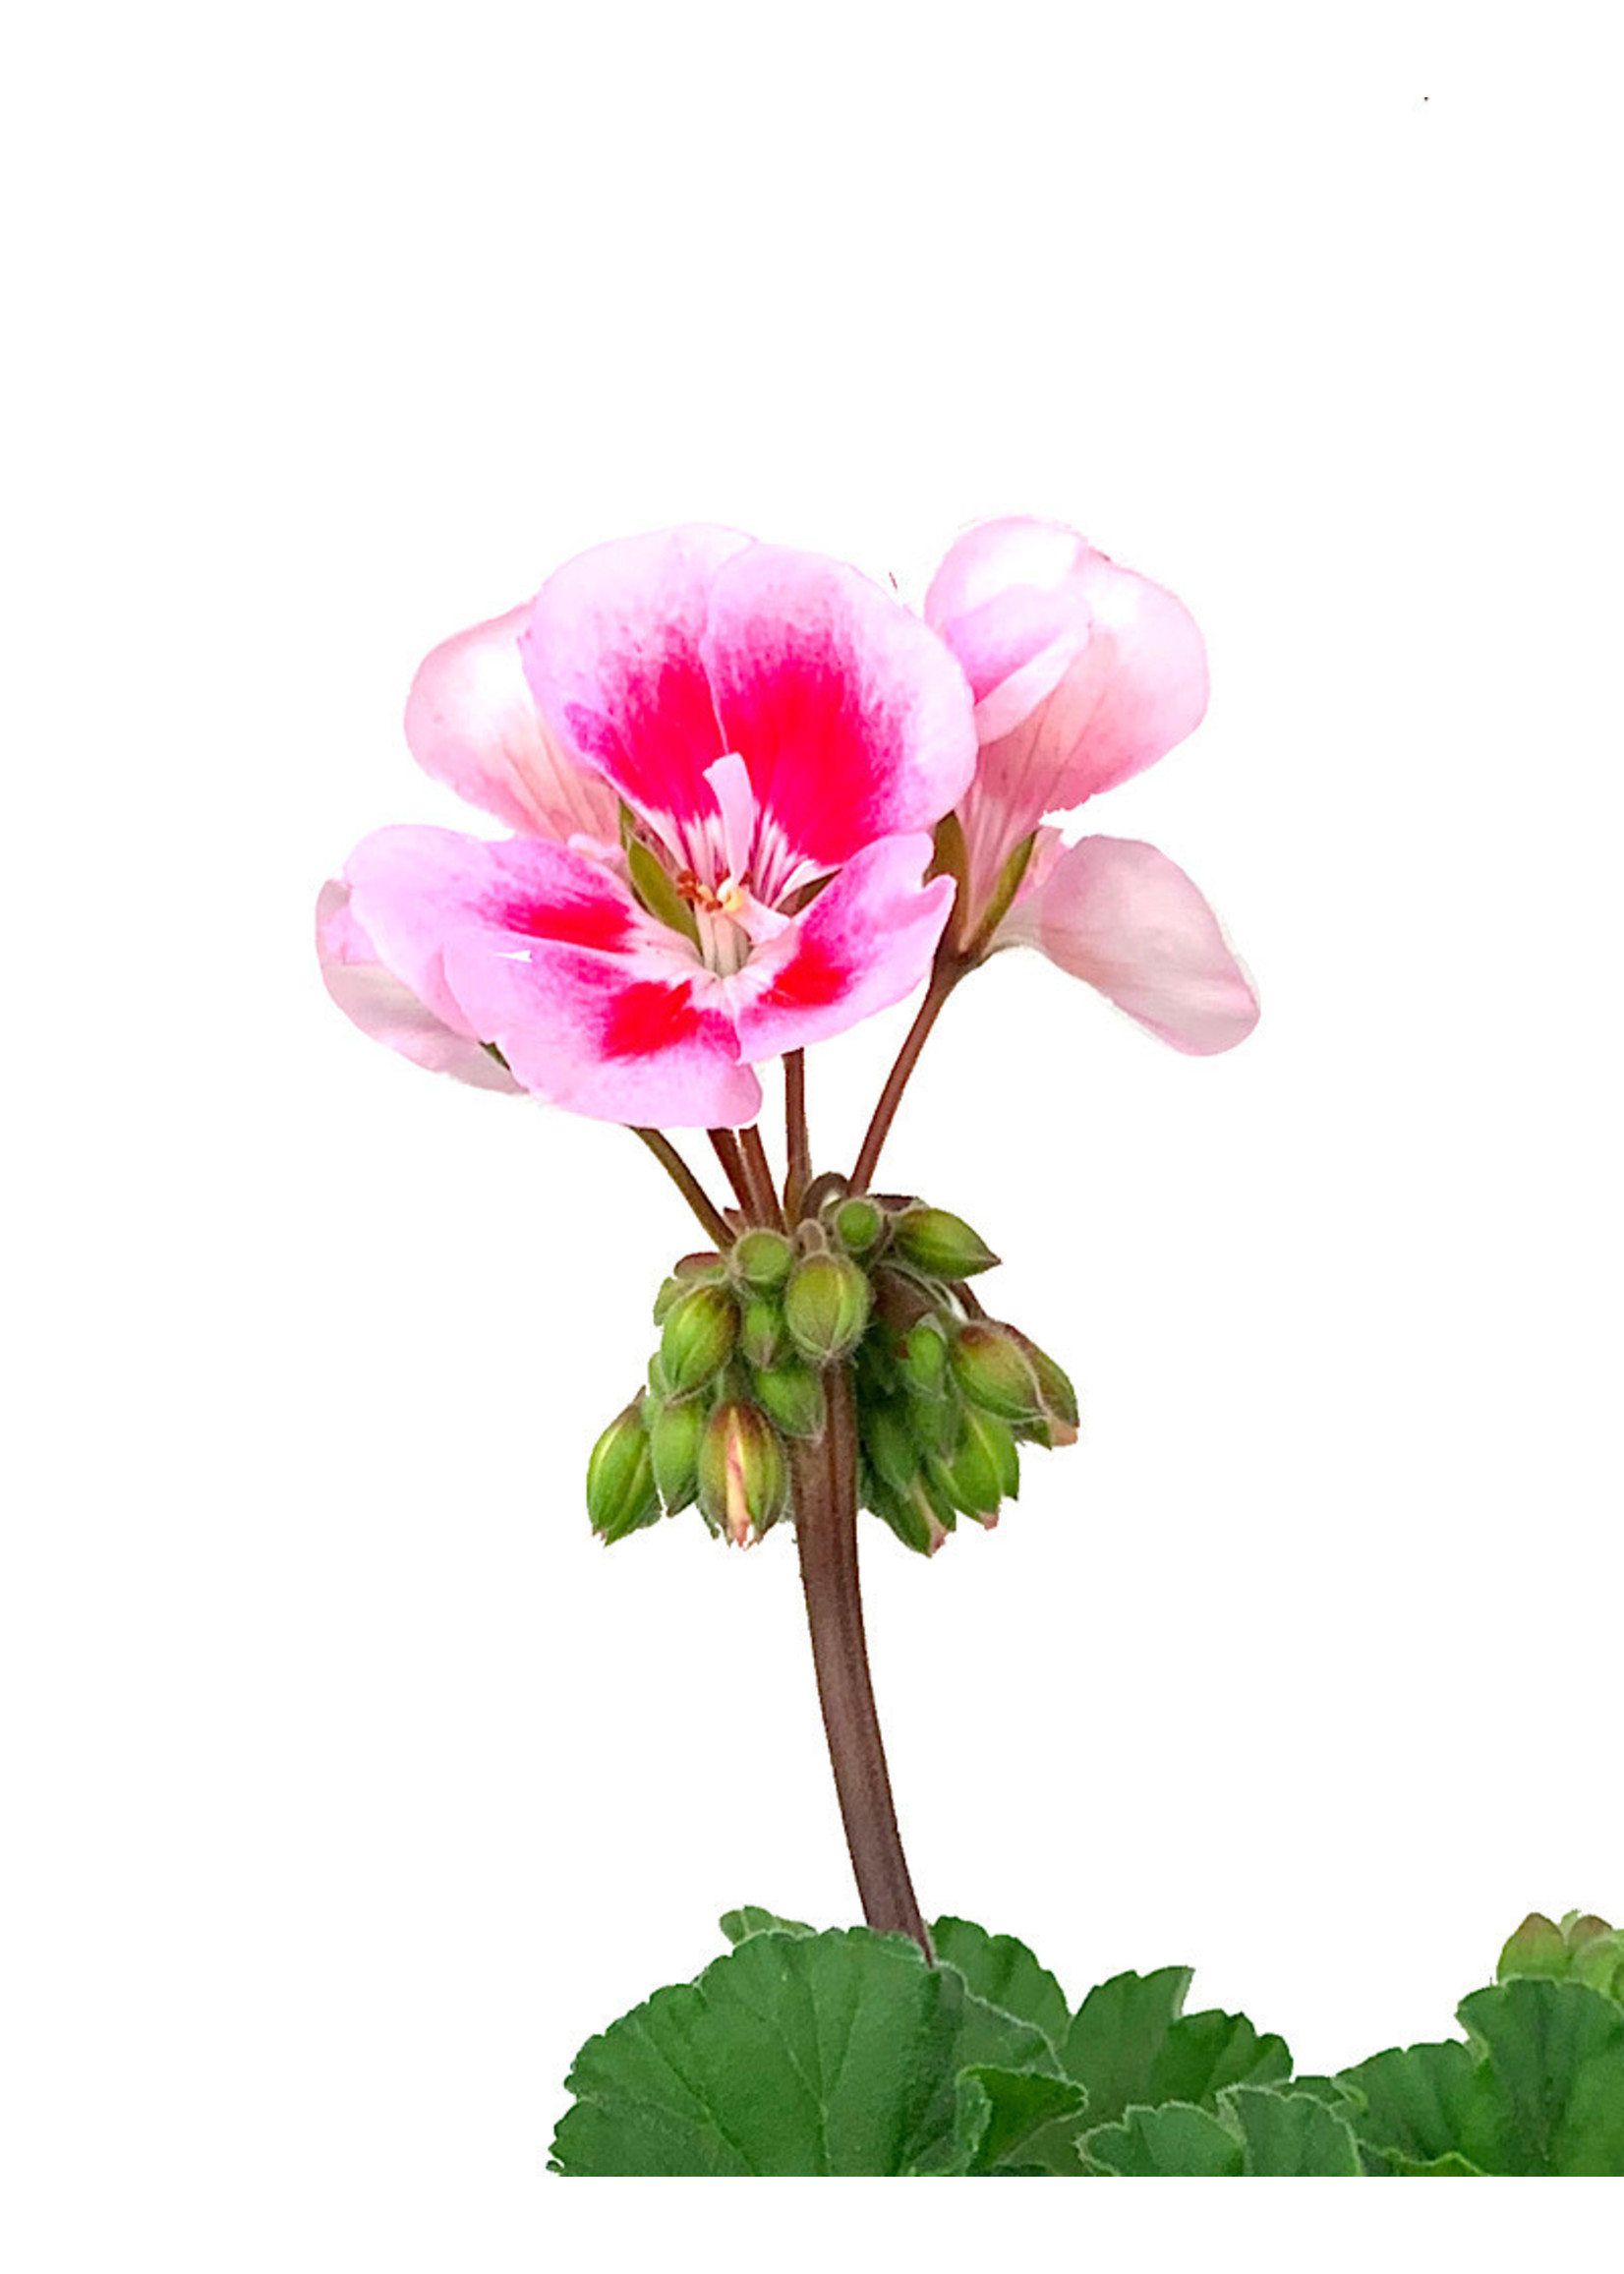 Geranium Zonal 'Presto Pink Sizzle'  5 inch